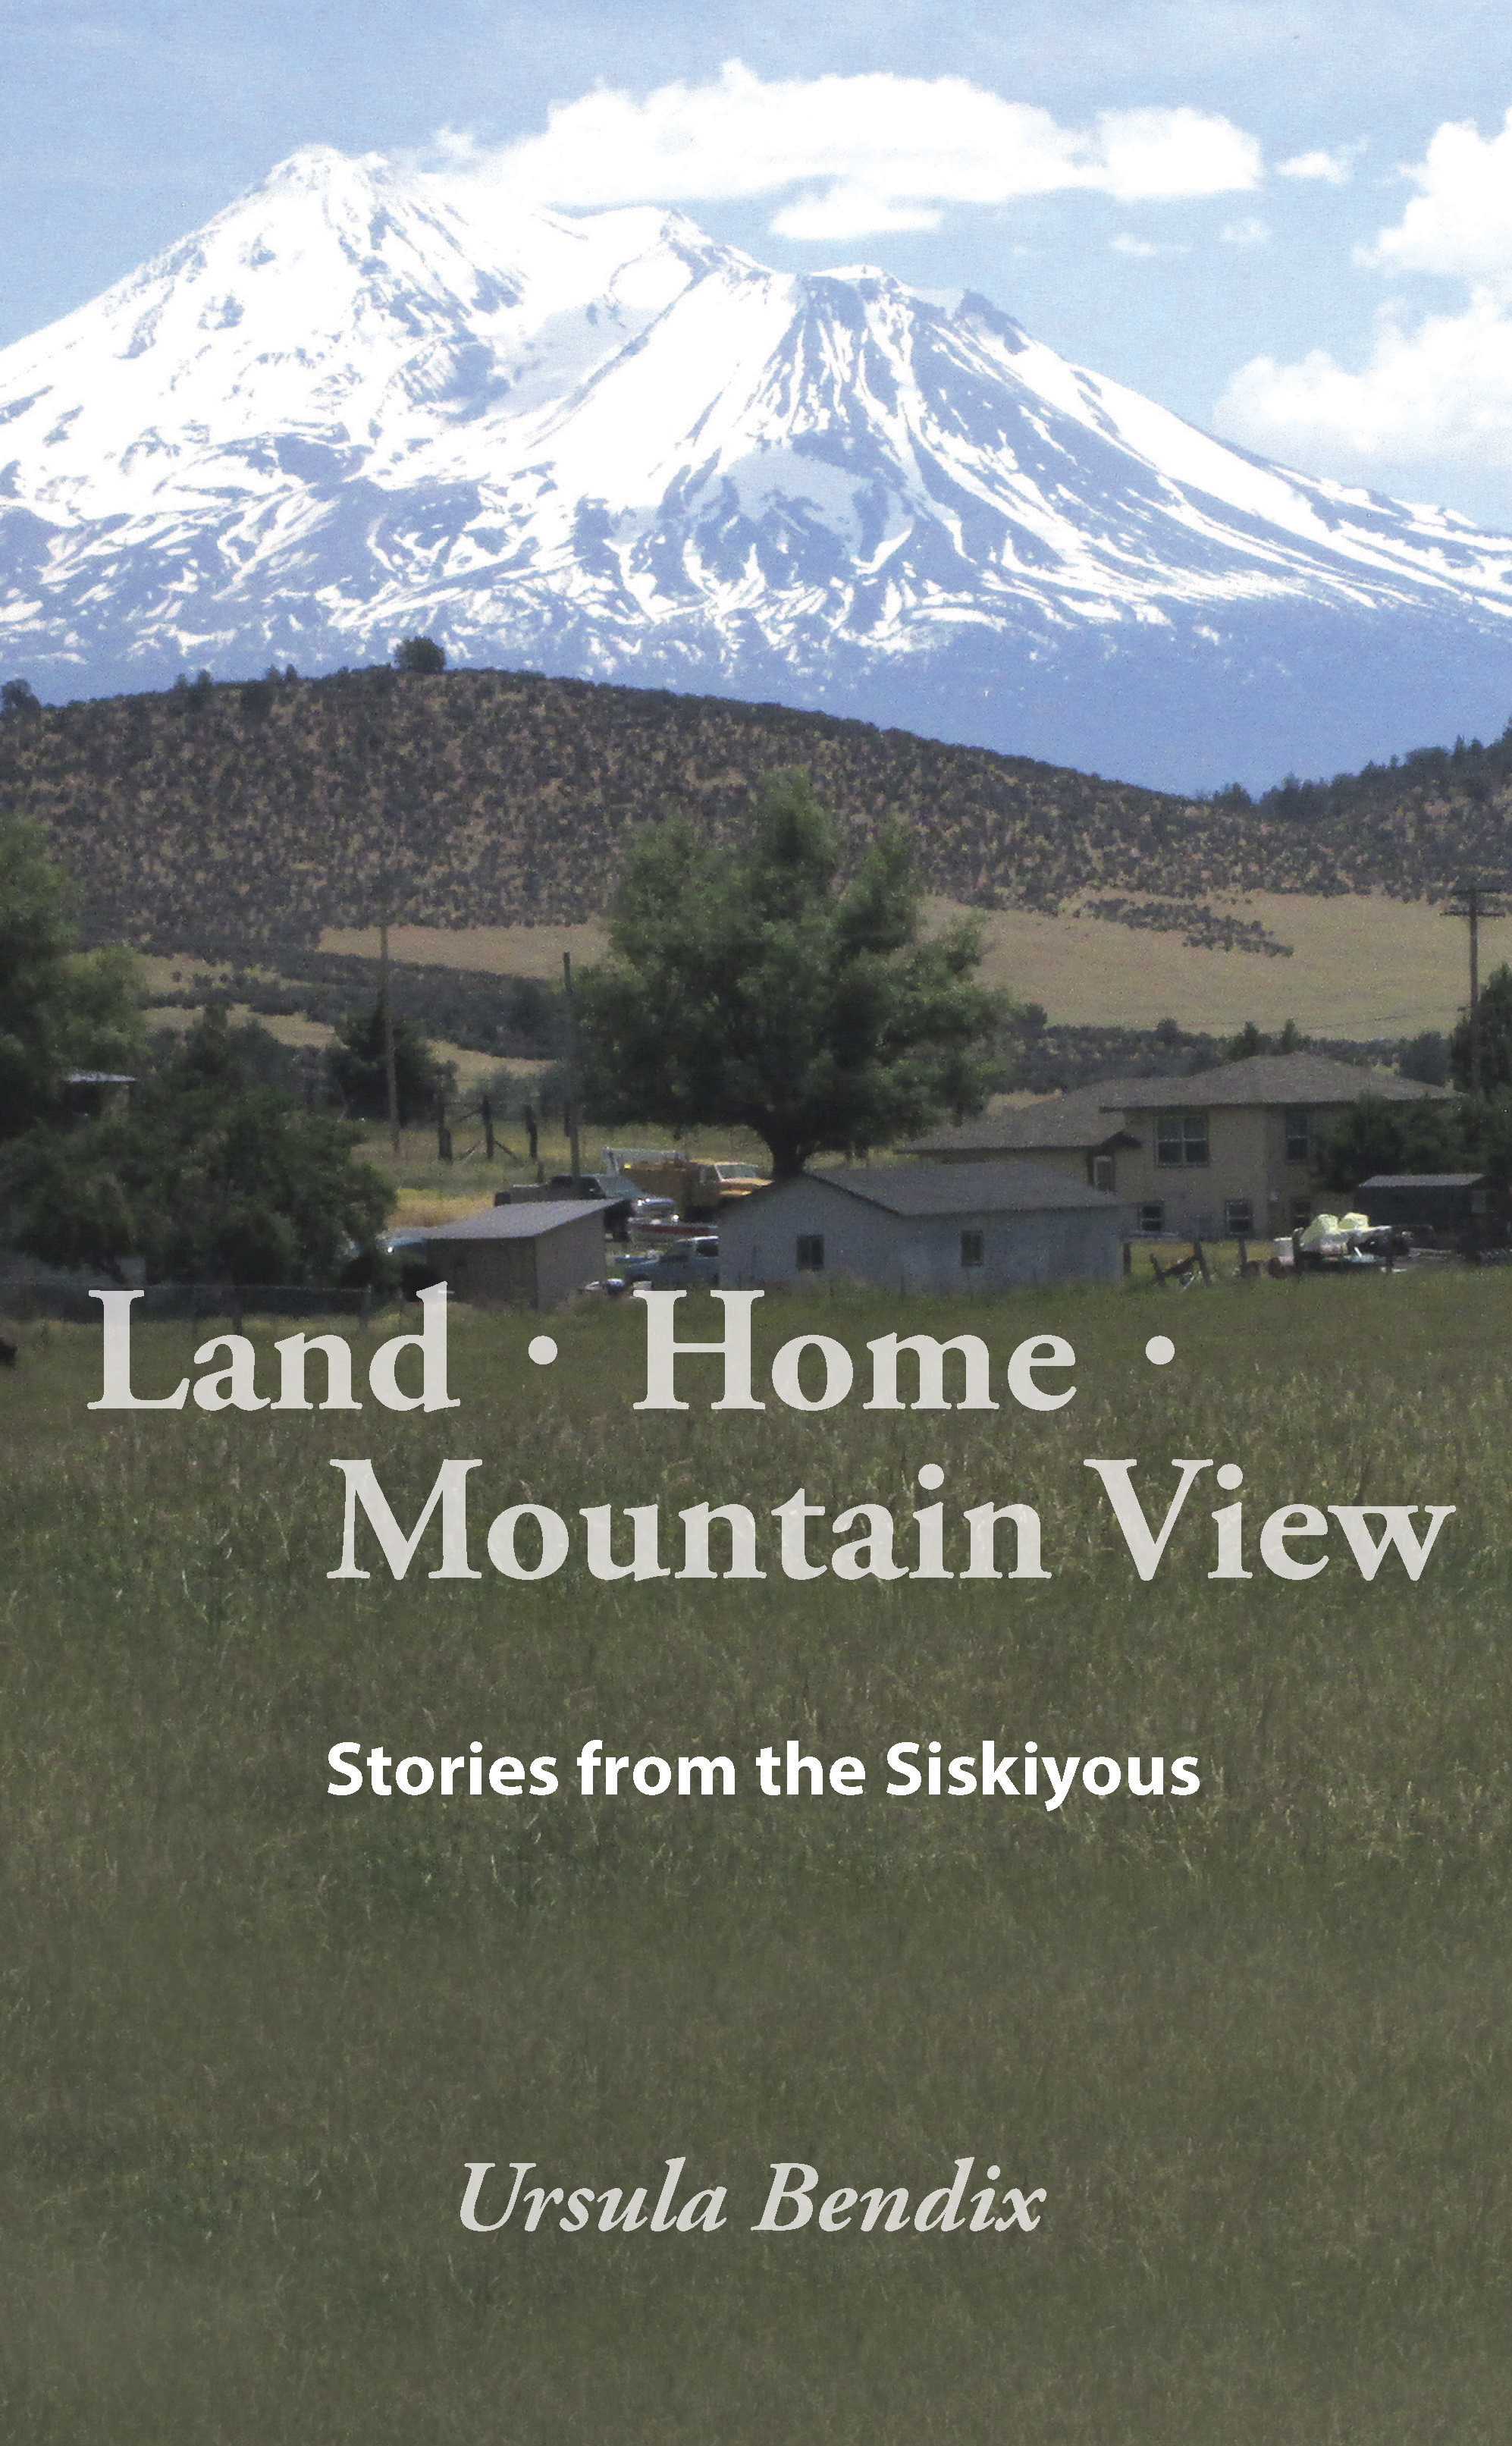 Land - Home - Mountain View by Ursula Bendix